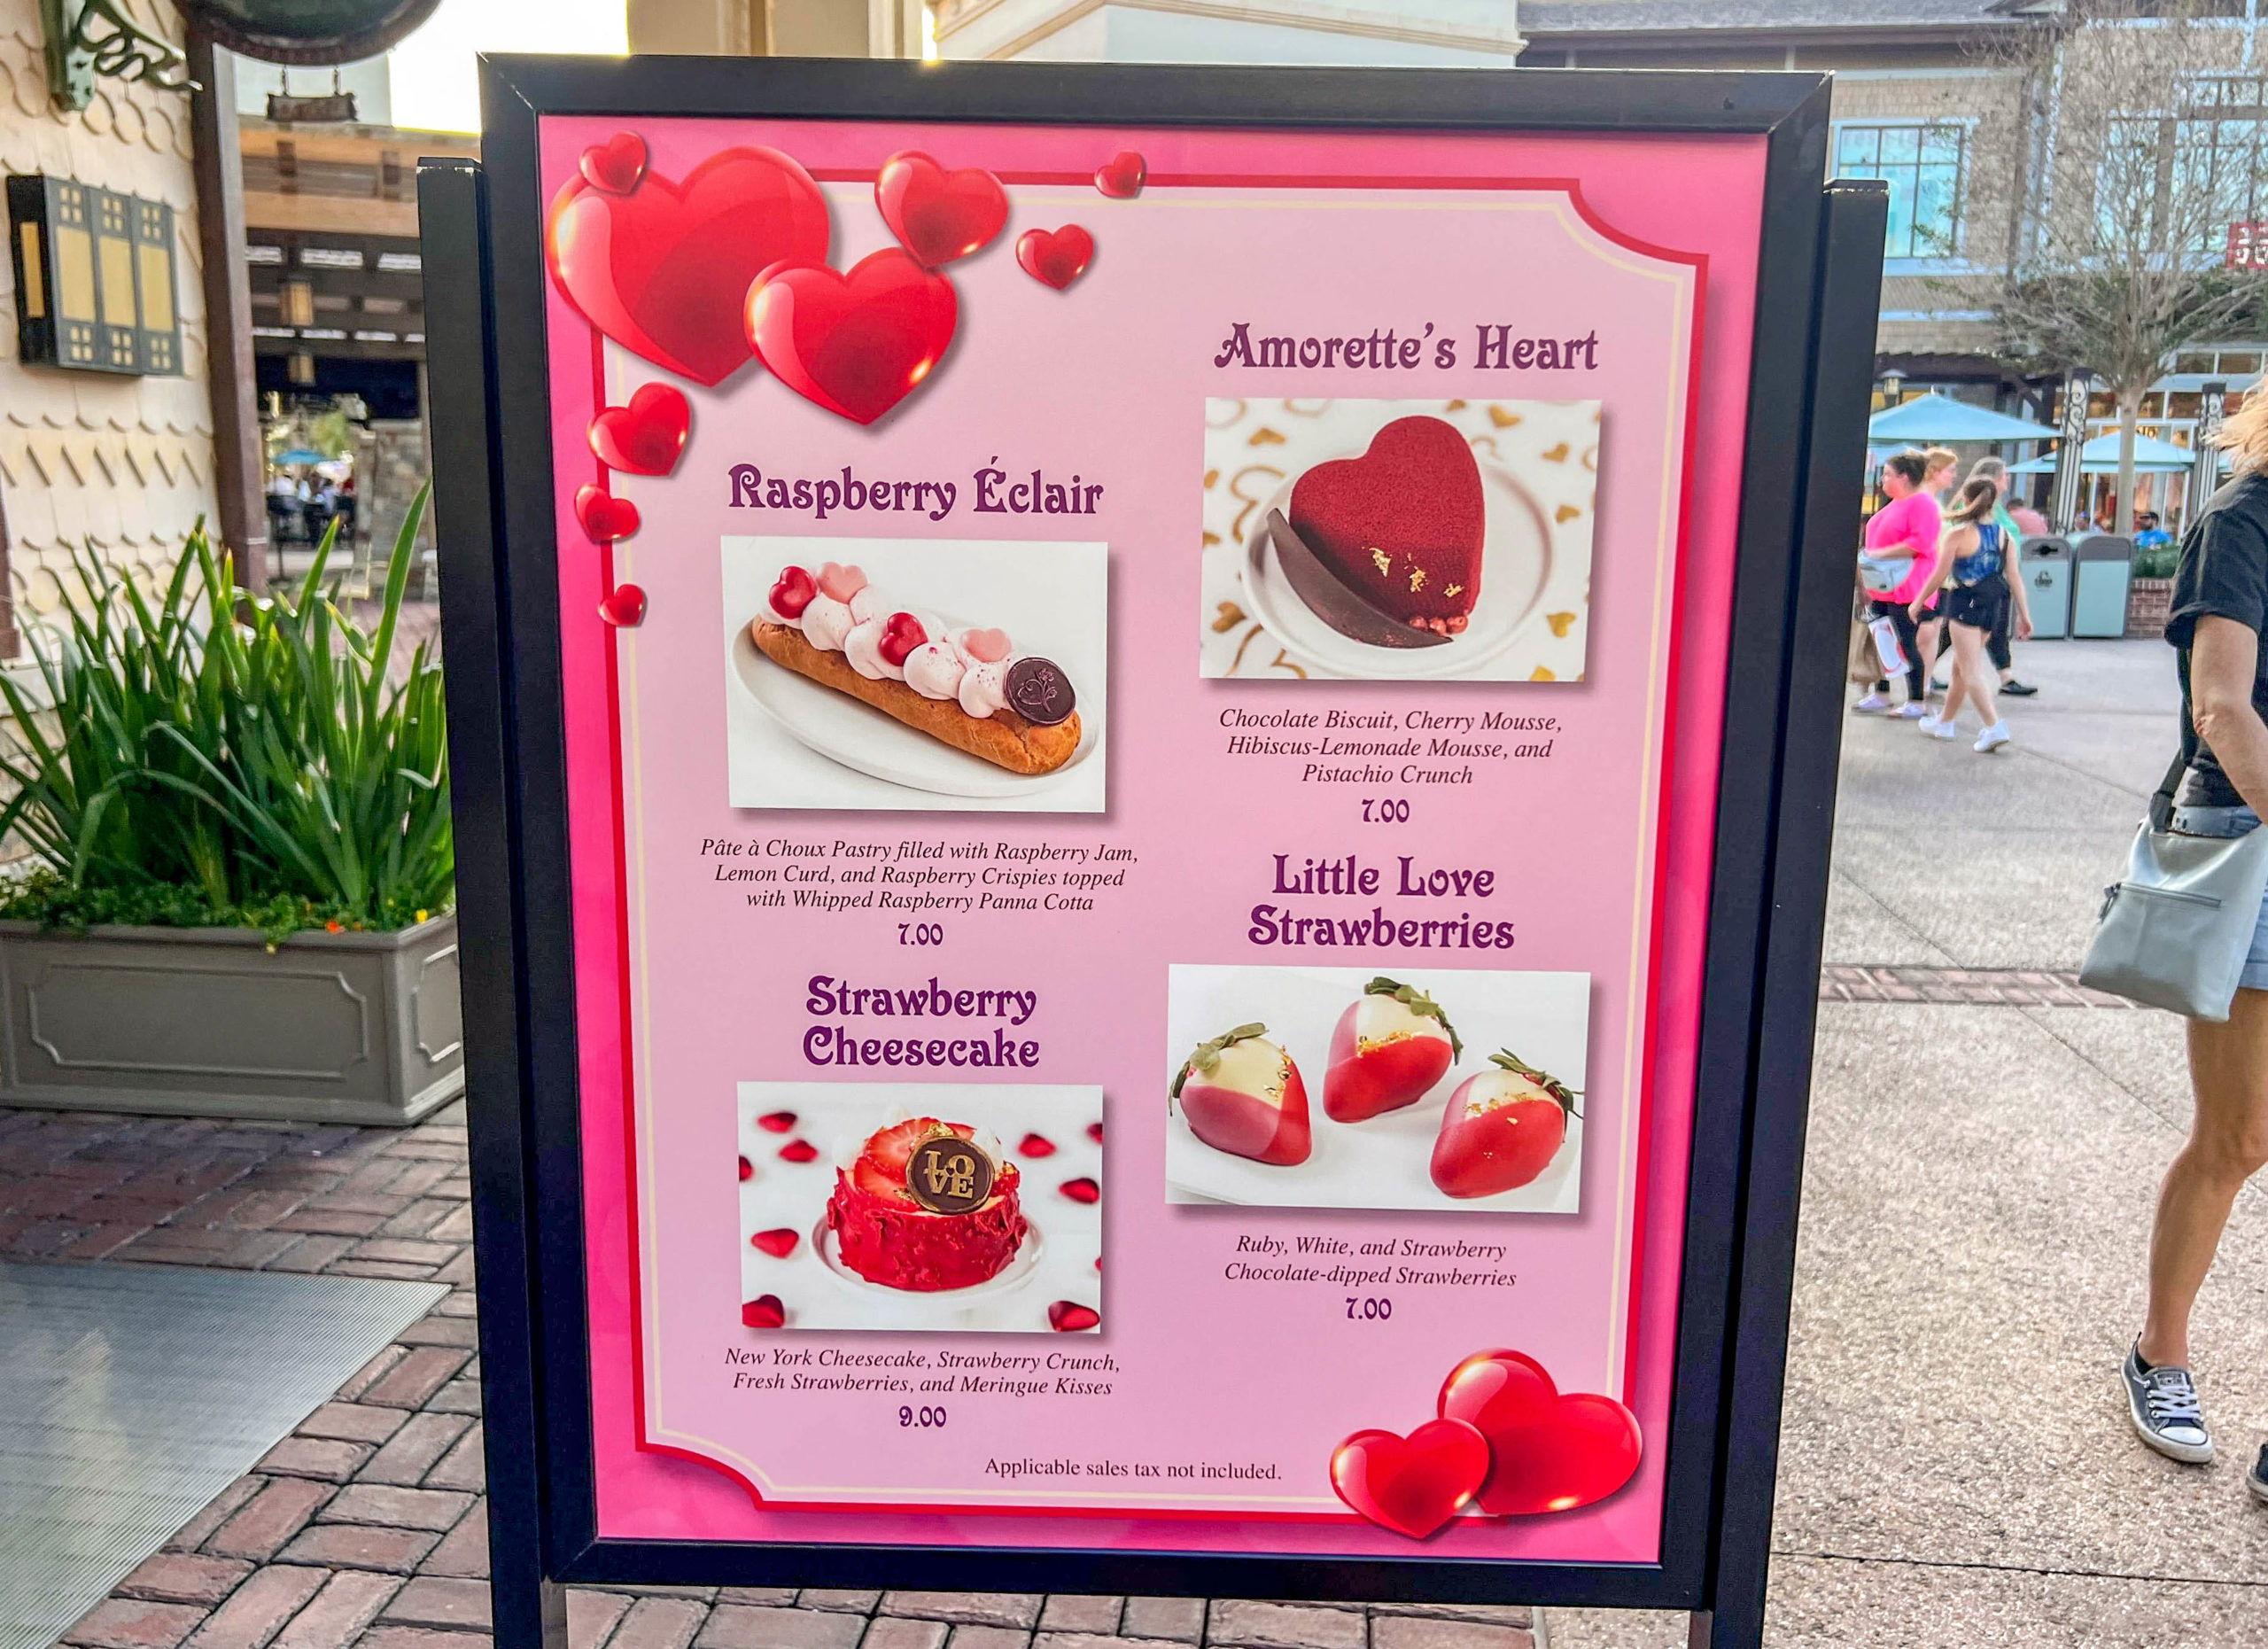 Amorette's Valentine's Day menu